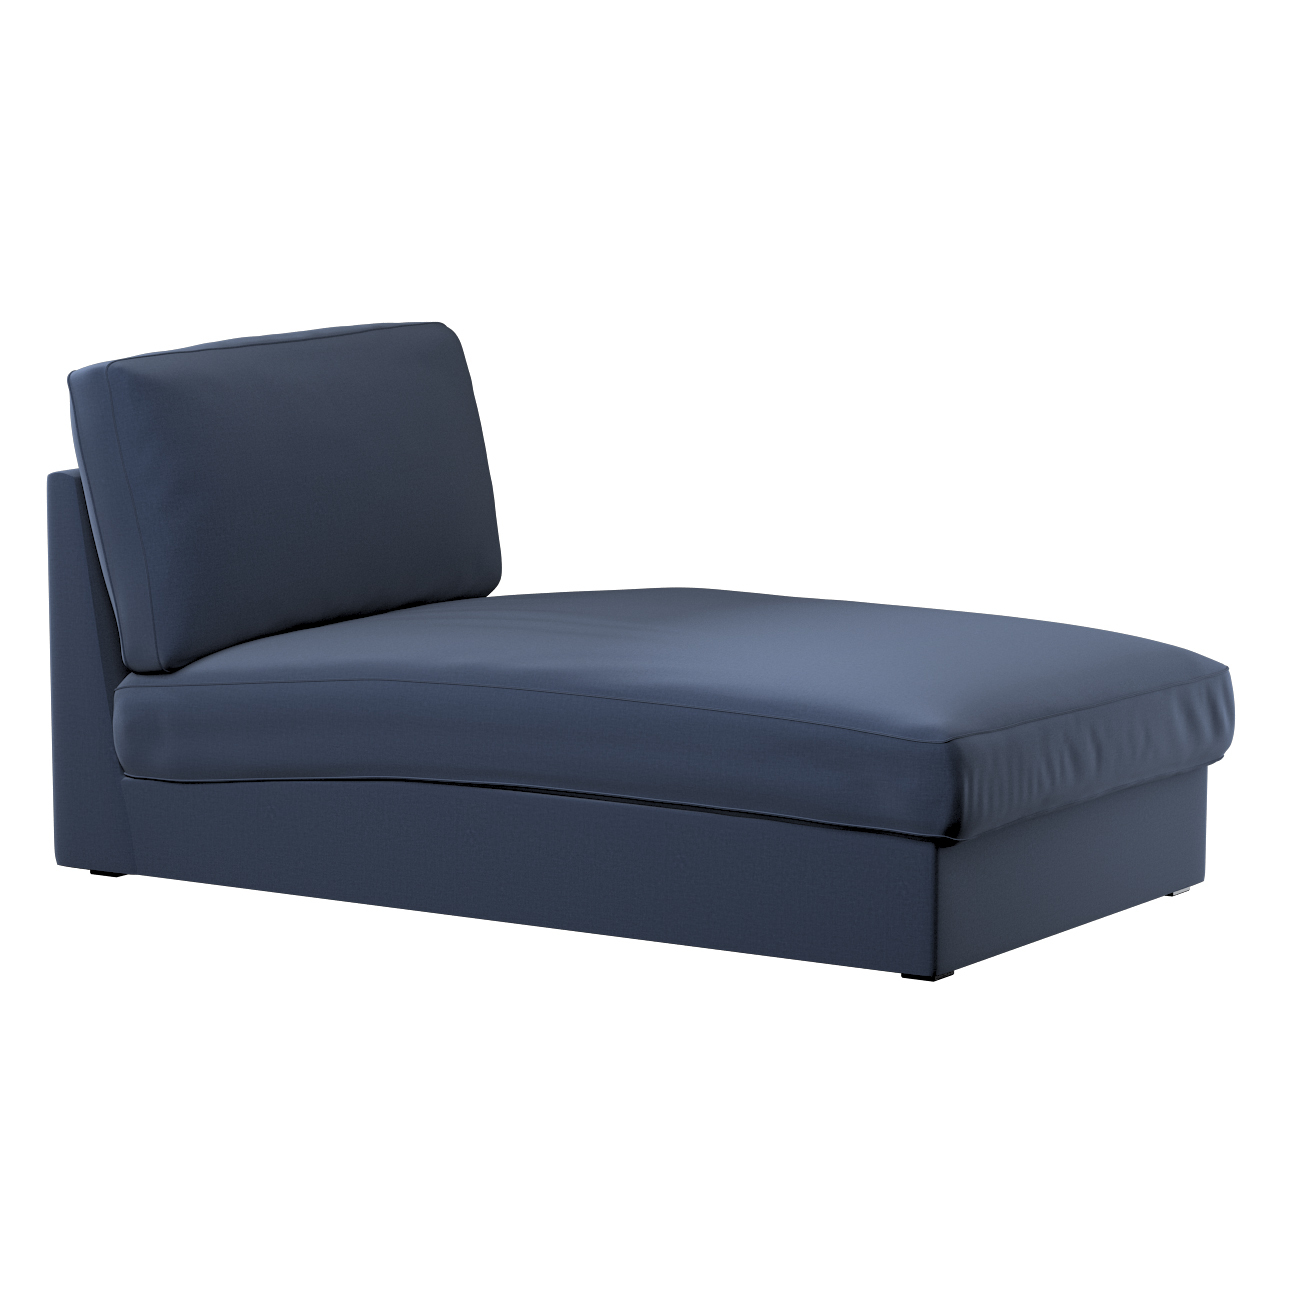 Bezug für Kivik Recamiere Sofa, dunkelblau, Bezug für Kivik Recamiere, Ingr günstig online kaufen